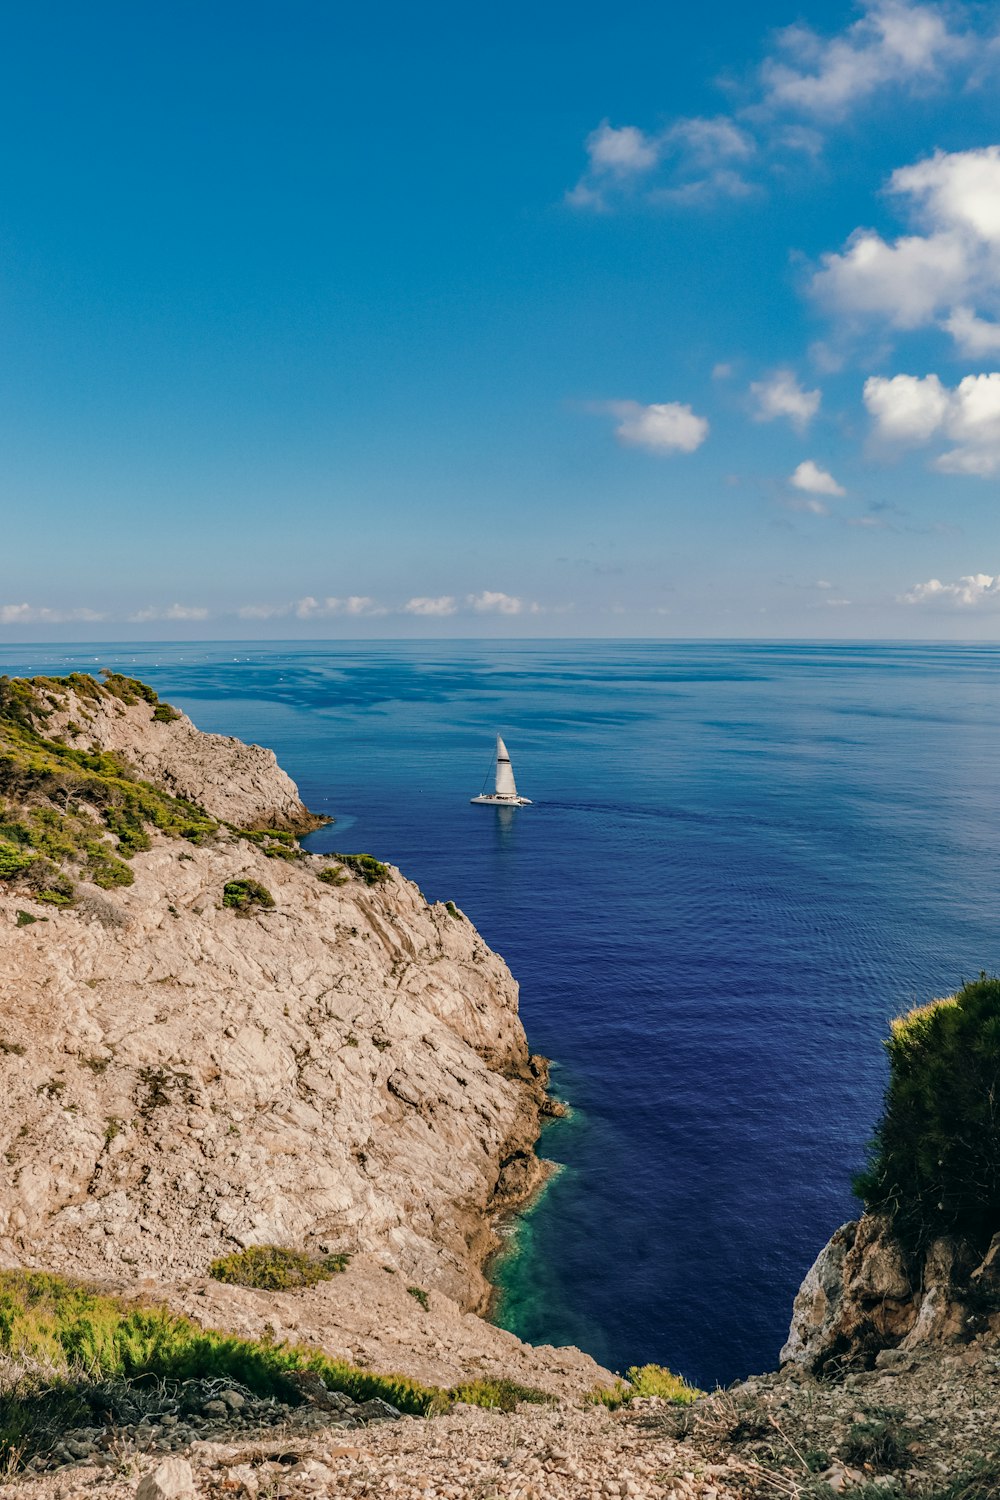 a sailboat in the ocean near a rocky cliff